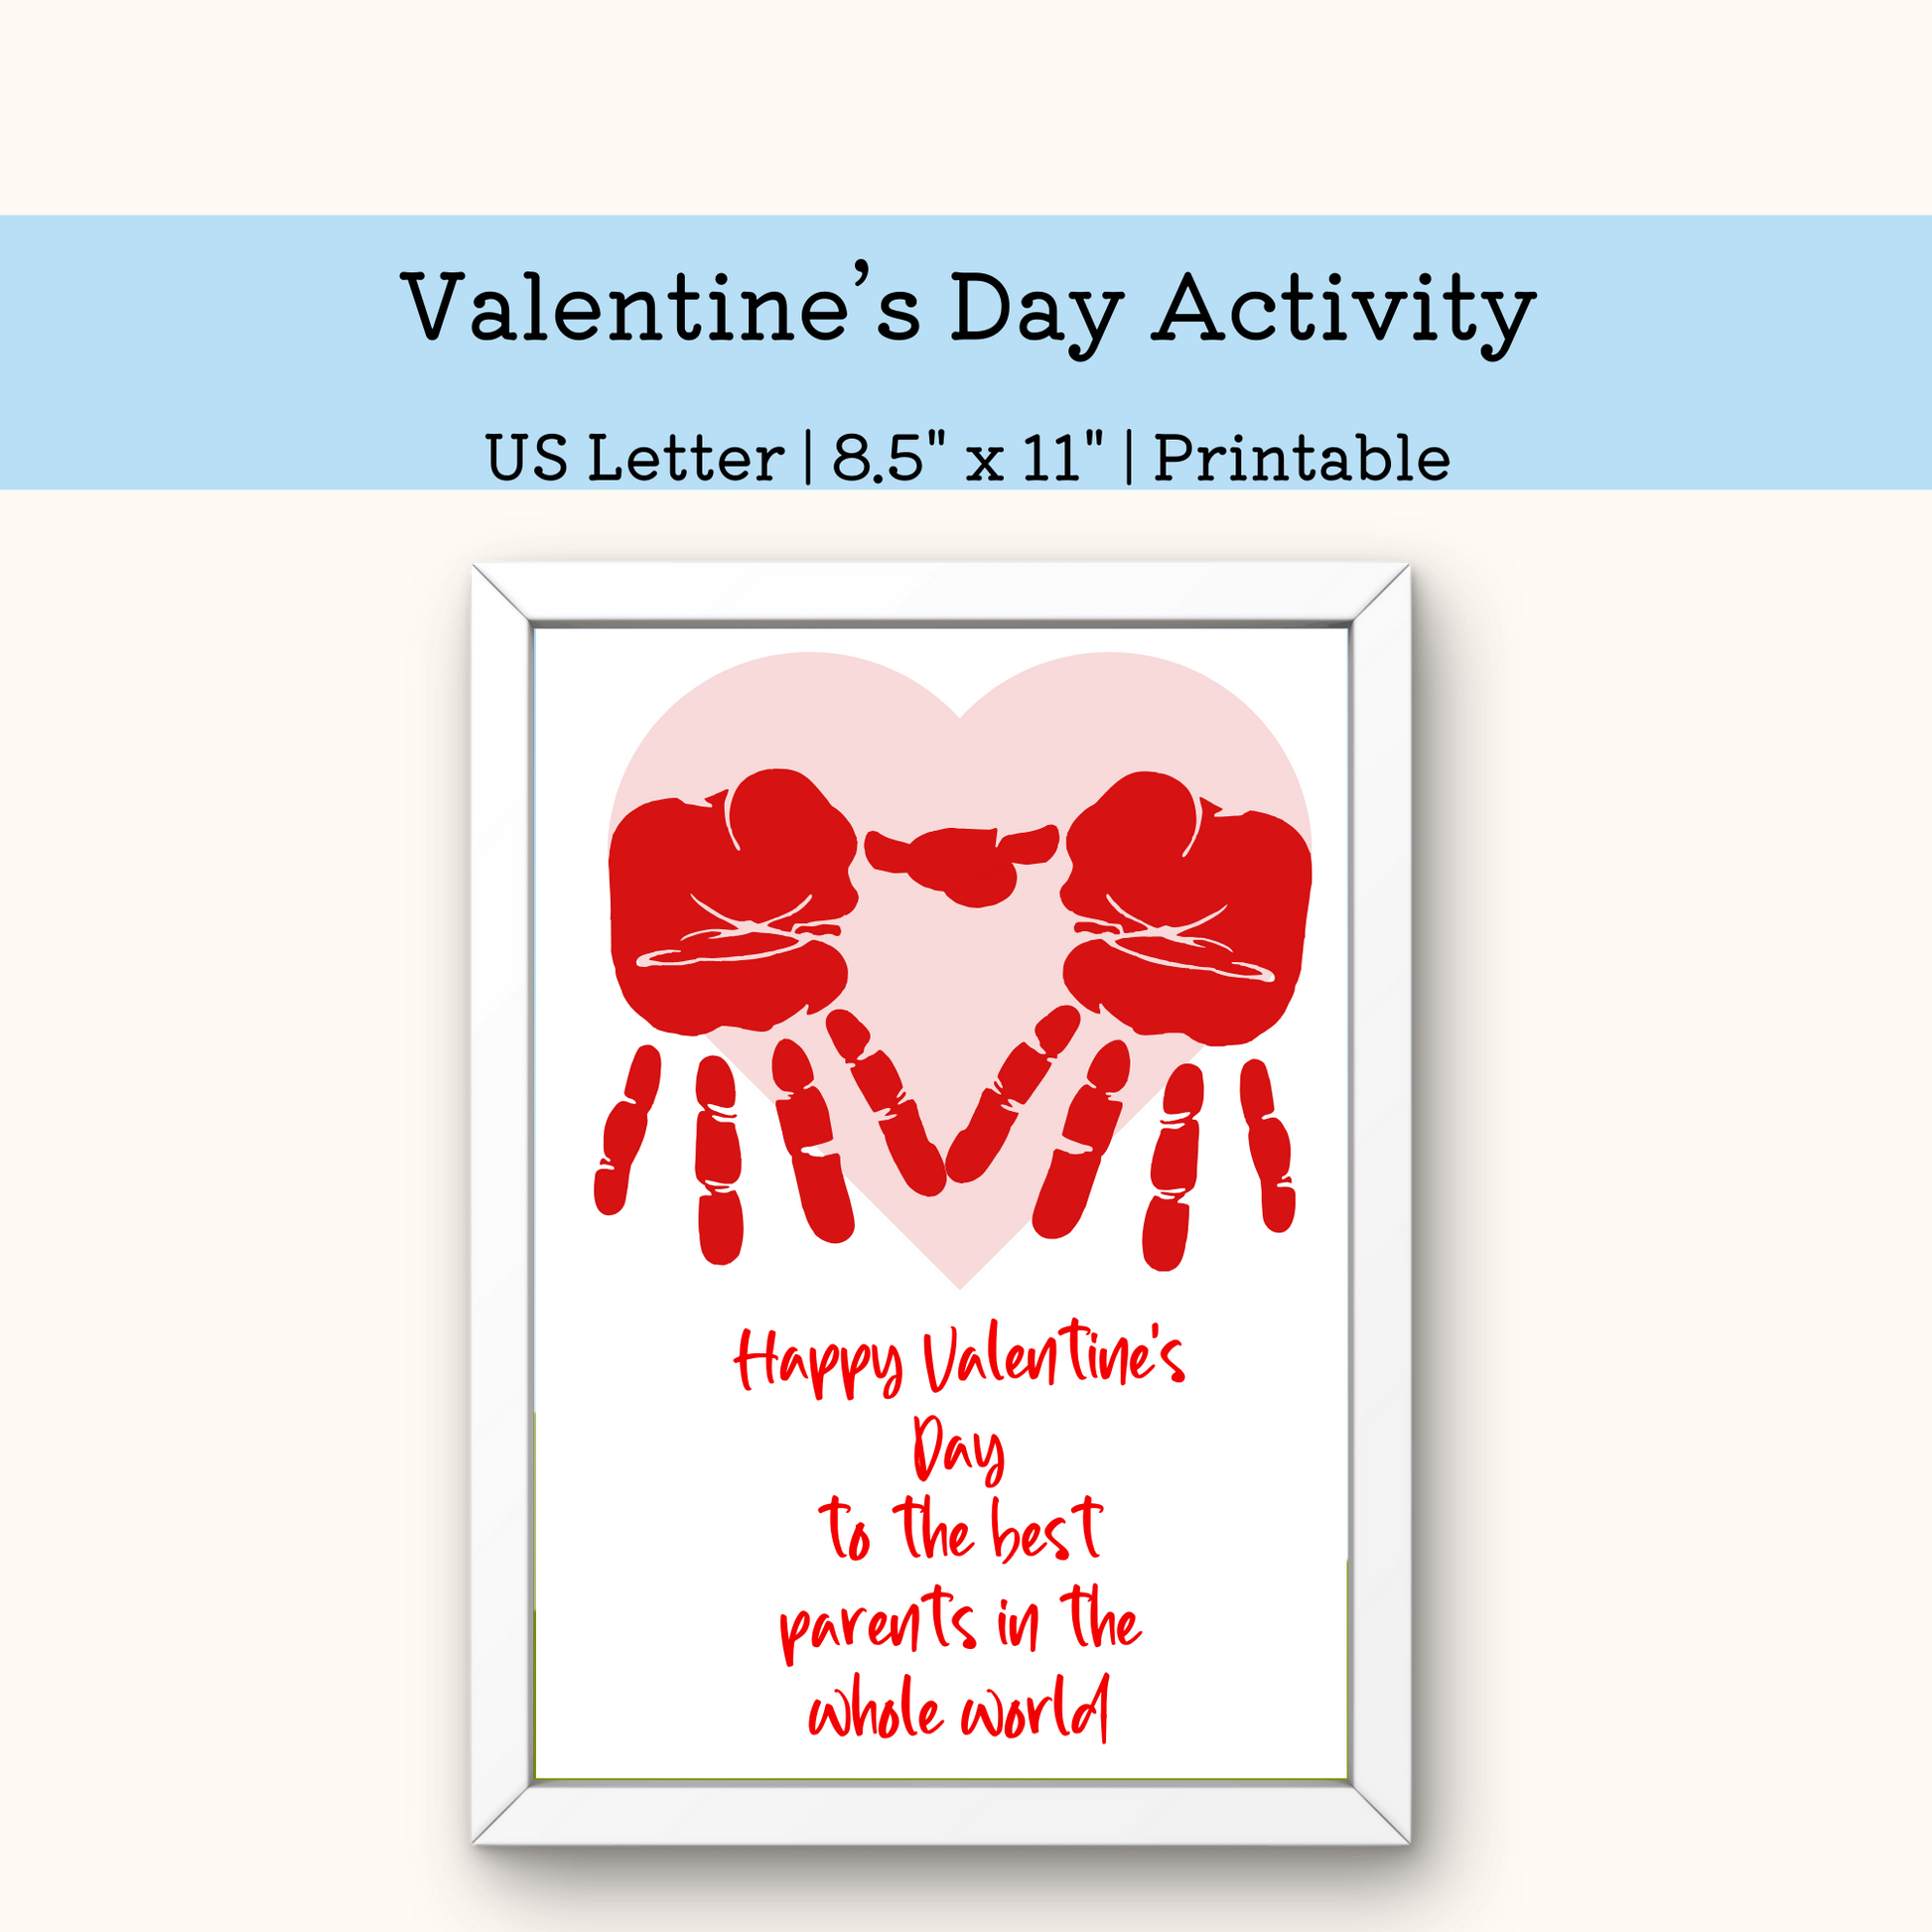 Heart Valentine activity